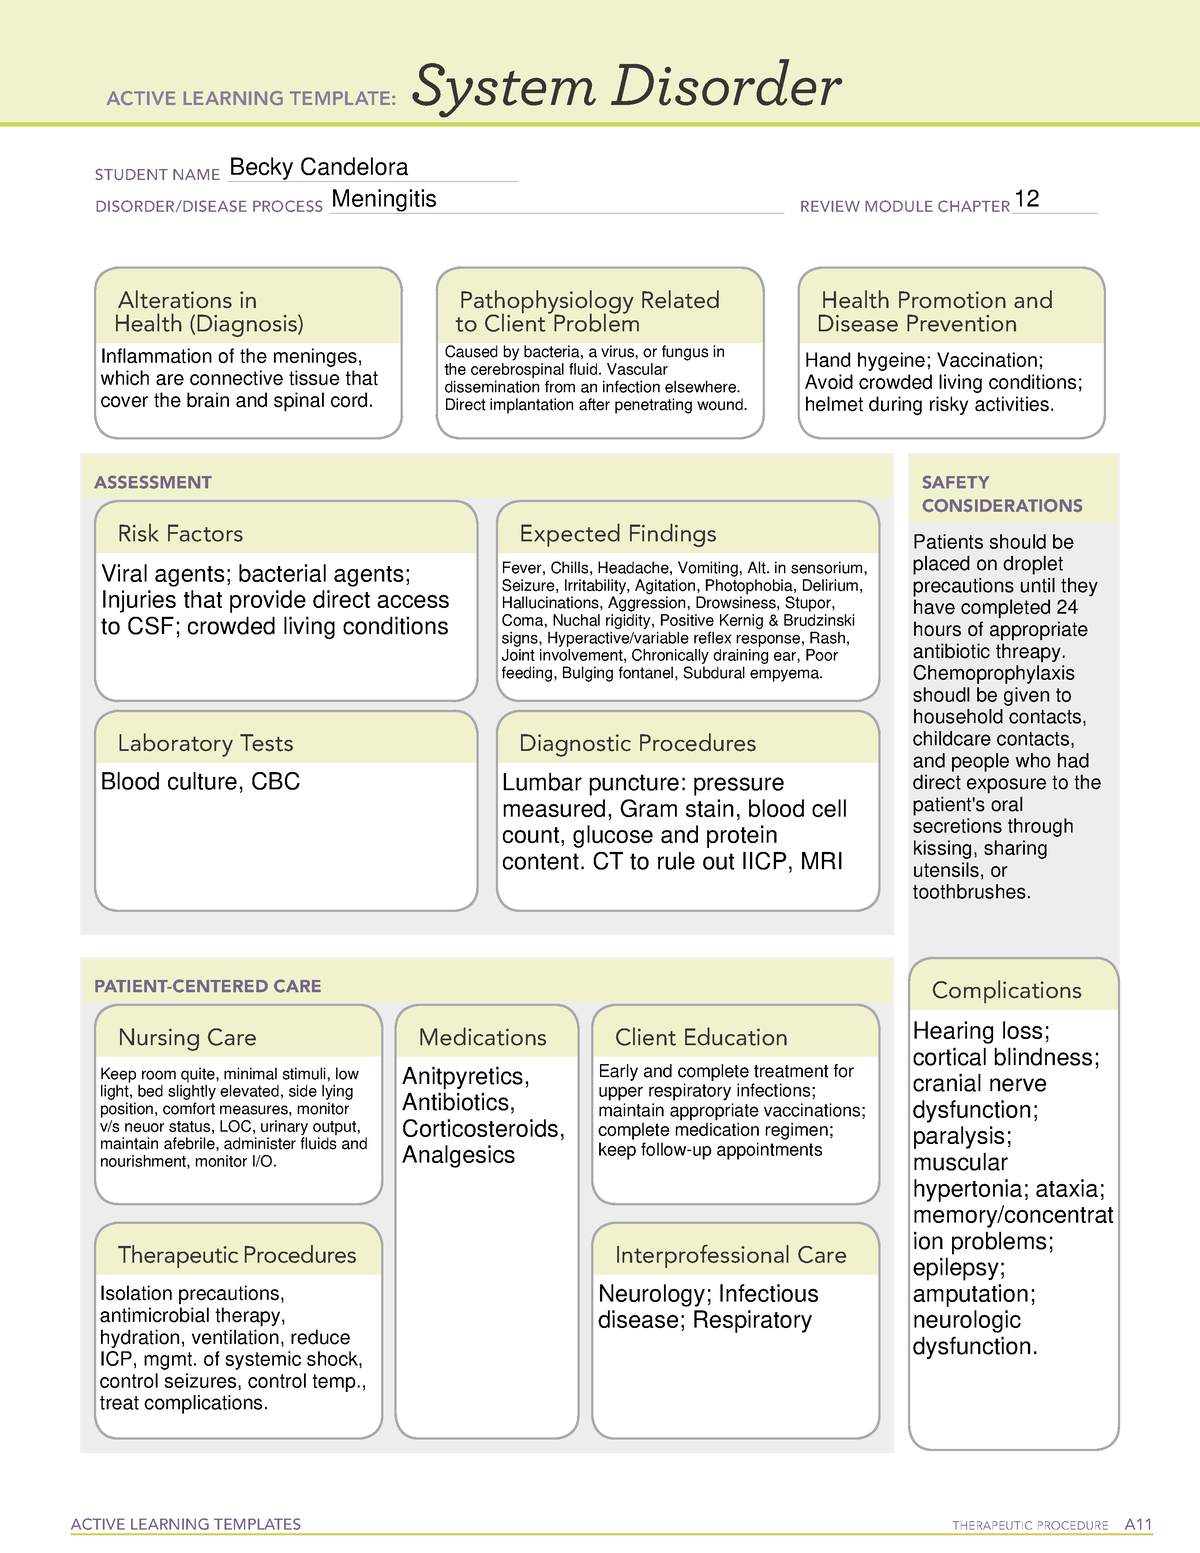 ati-system-disorder-template-meningitis-active-learning-templates